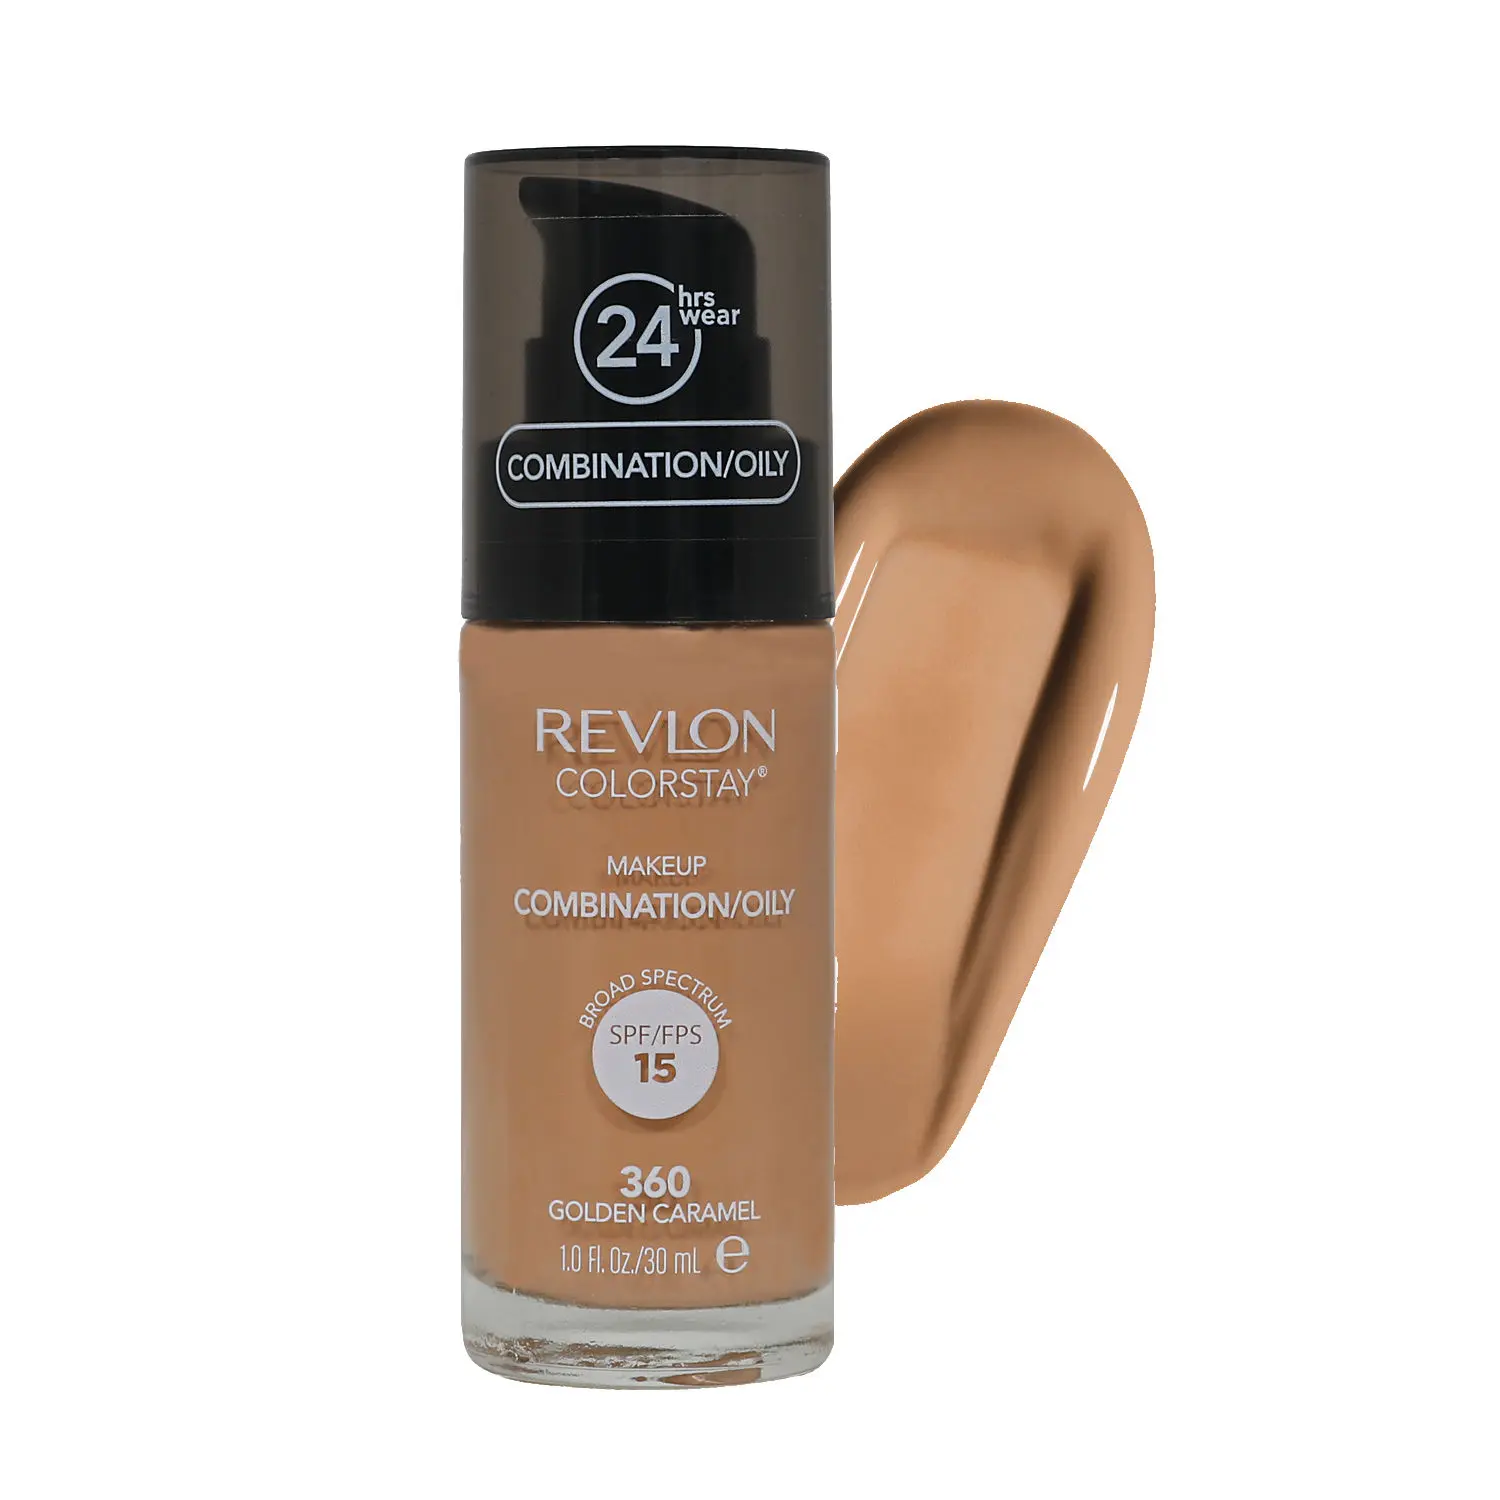 Revlon ColorStay Makeup for Combination / Oily Skin - Golden Caramel